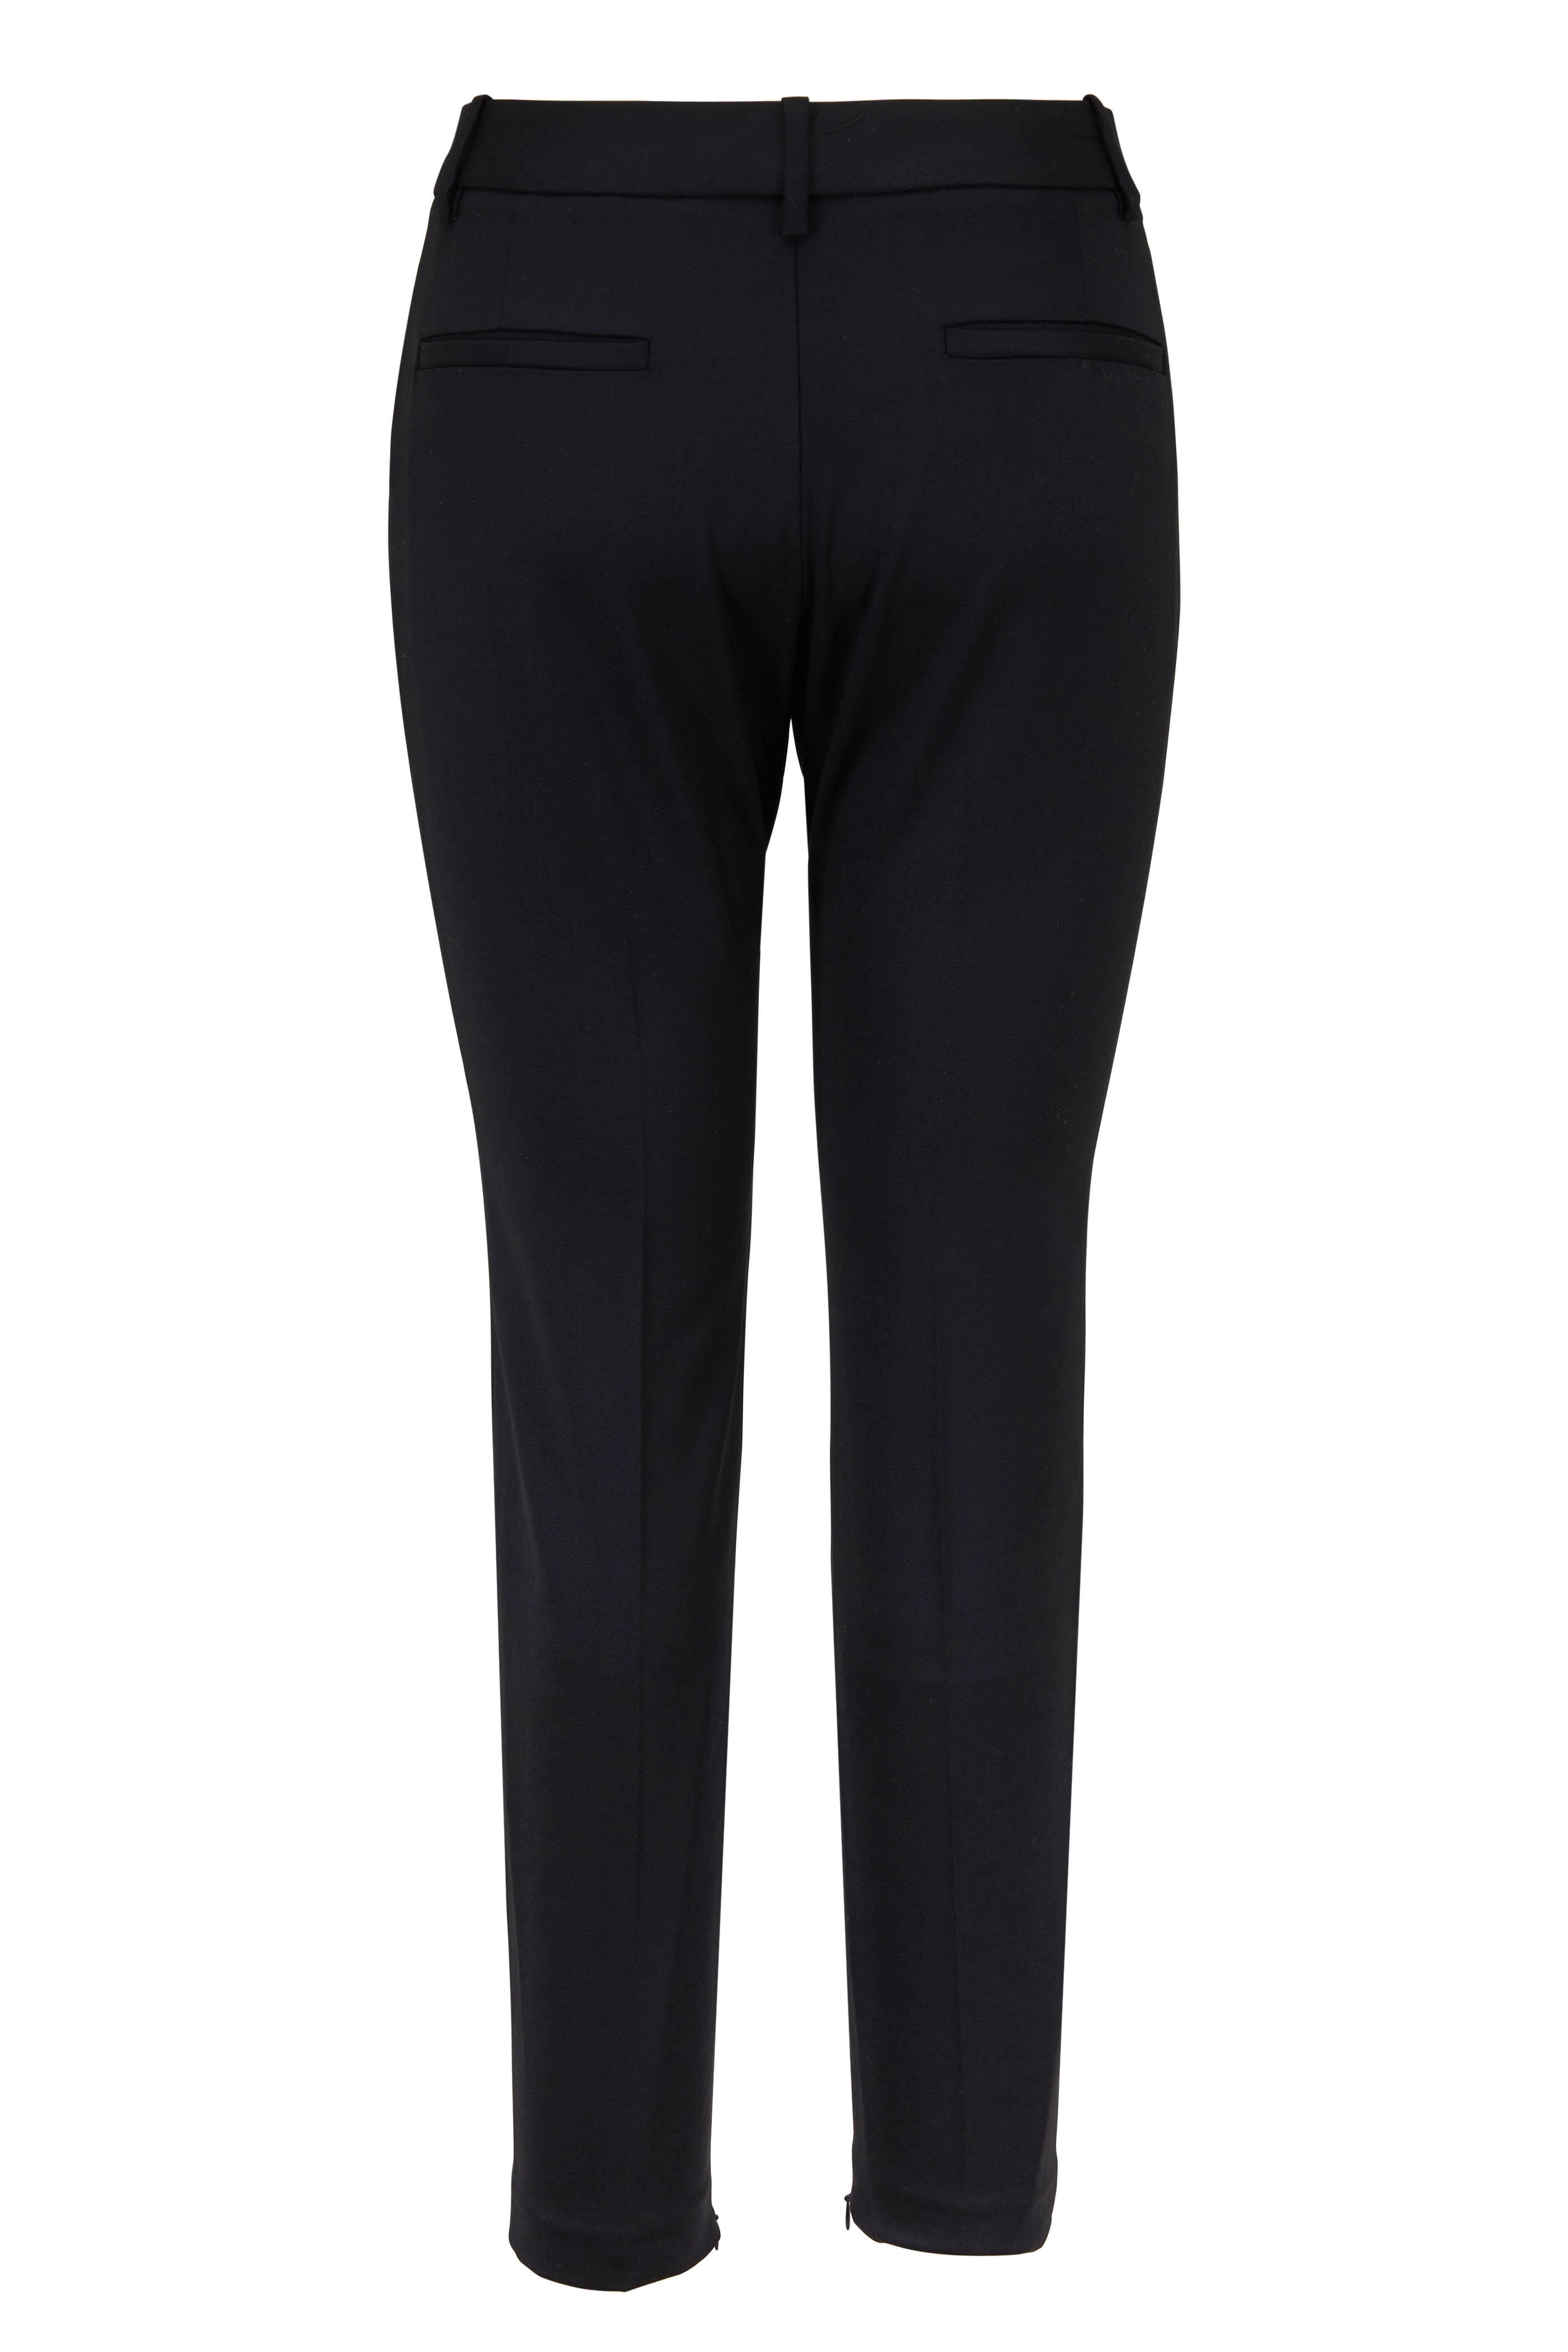 Nili Lotan Black Pinstripe 100% Virgin Wool Corette Pants Size US 00 $550